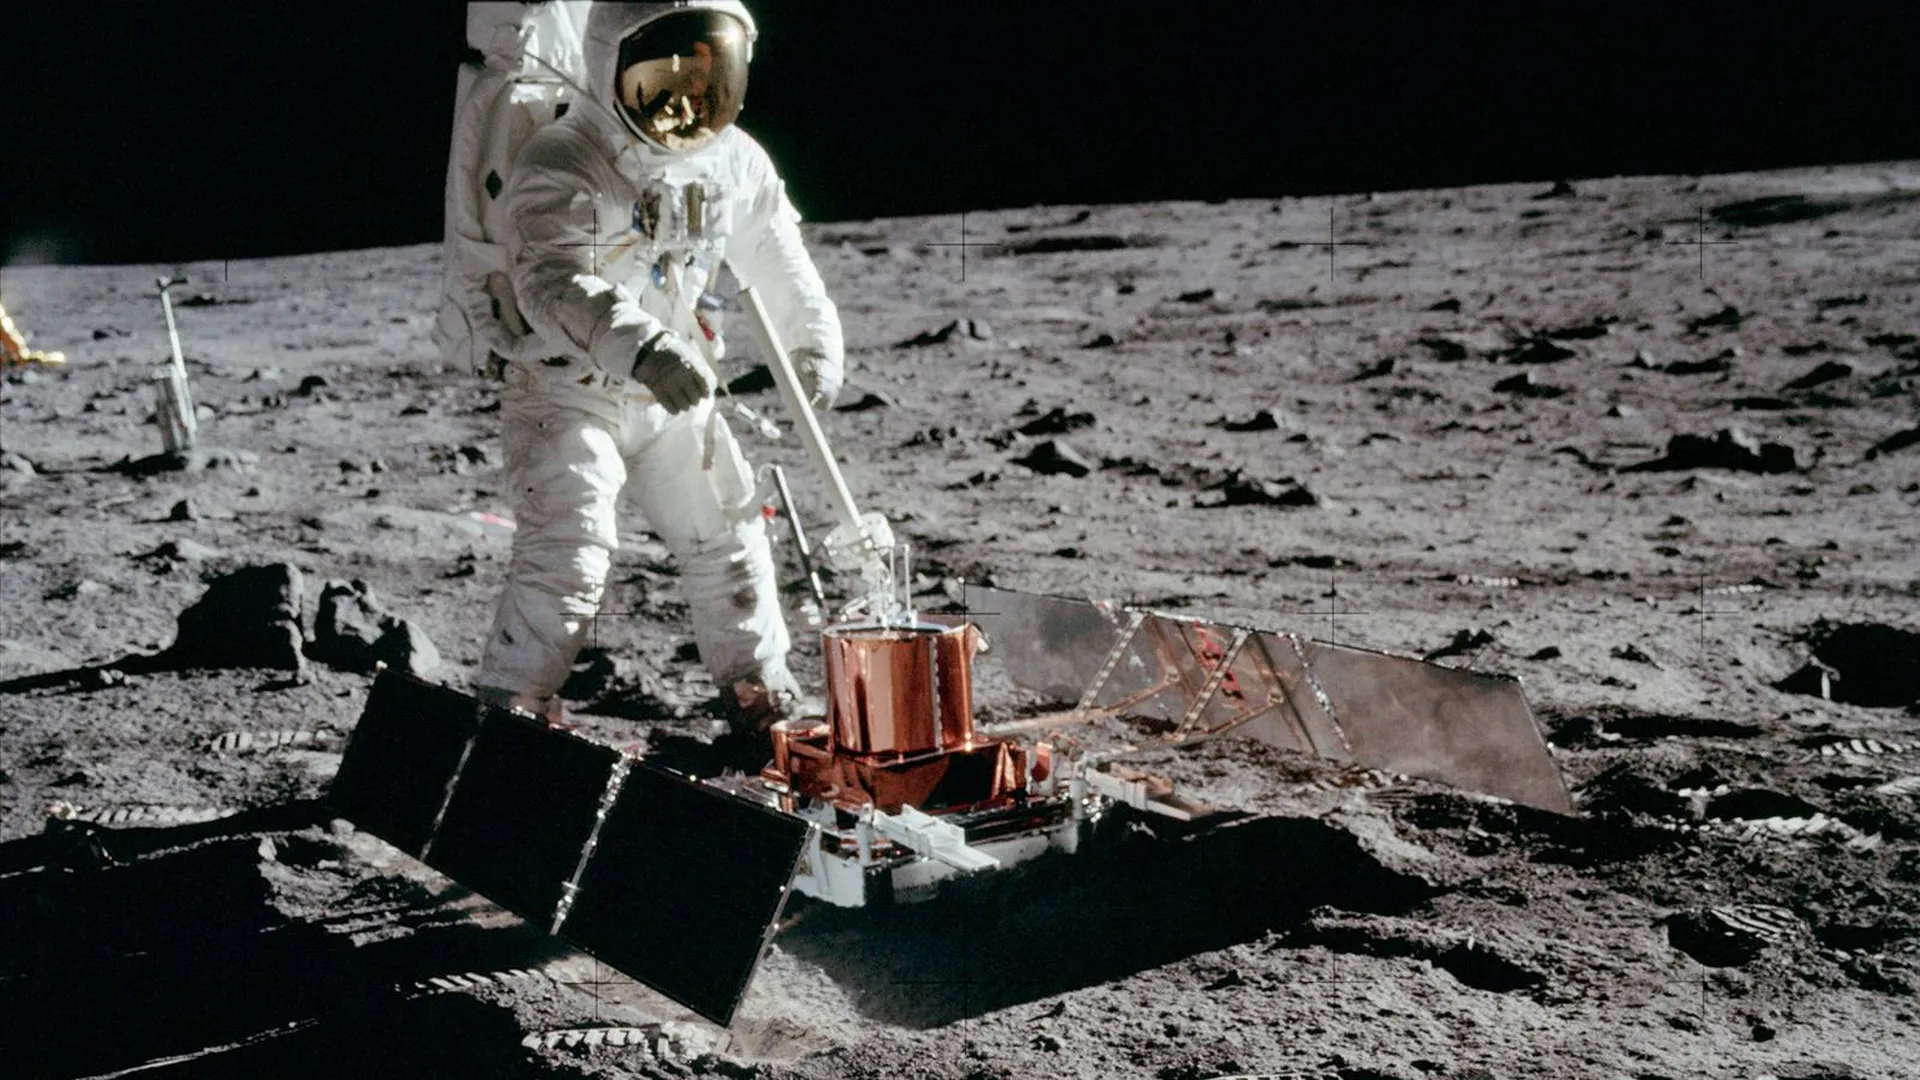 Луна есть помогать. Аполлон 11. Апполо 11 на Луне. Миссия Аполлон на луну.